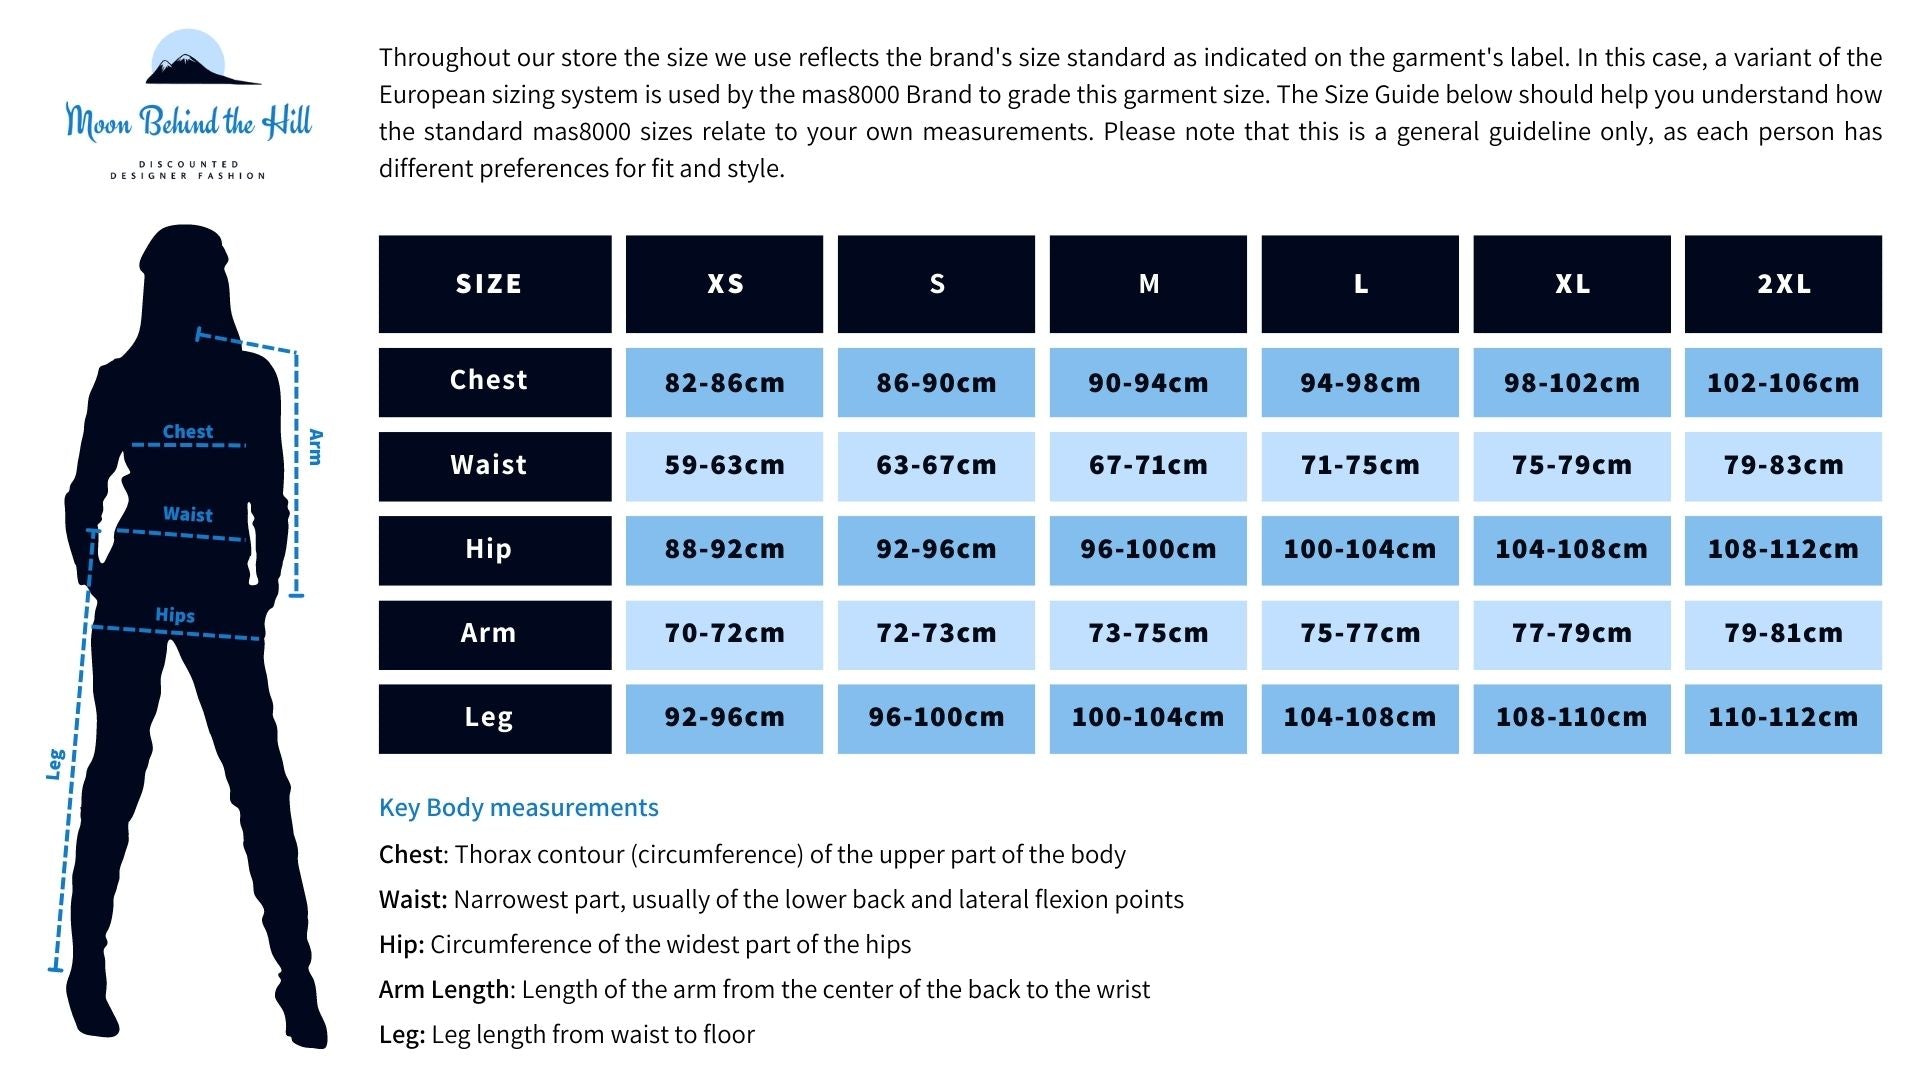 Standard mas8000 Women's Clothing Sizes & Body Measurements Guide ...